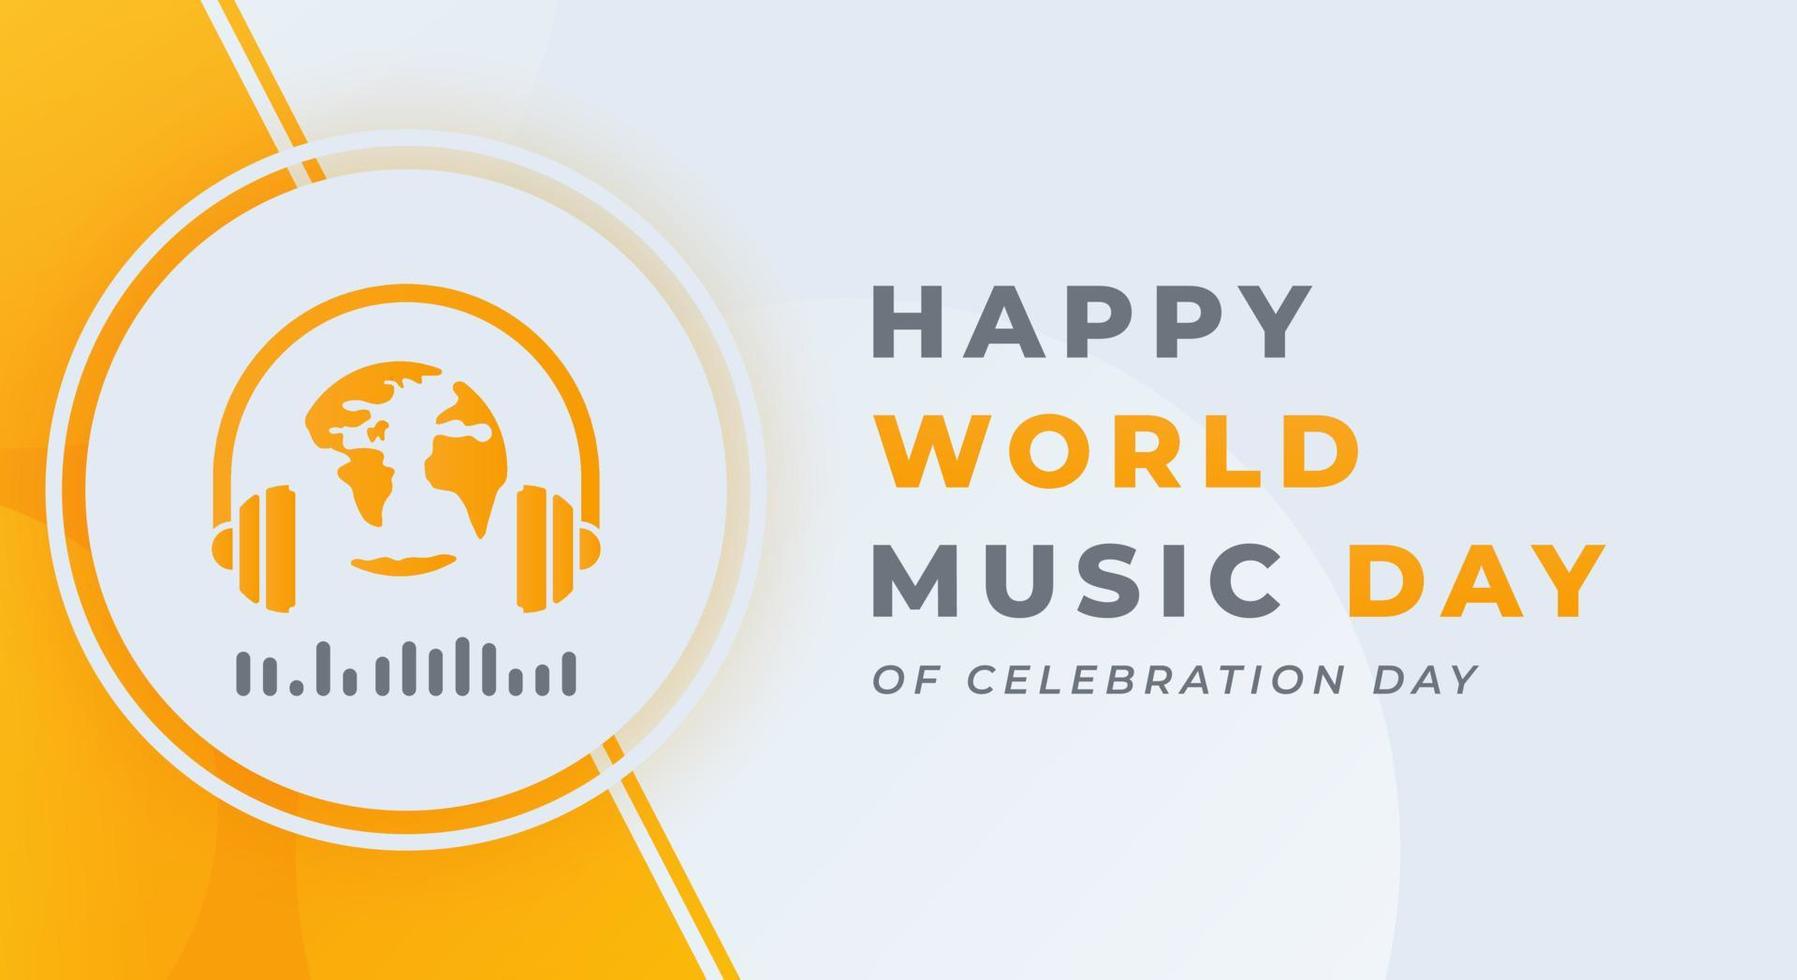 World Music Day Celebration Vector Design Illustration for Background, Poster, Banner, Advertising, Greeting Card